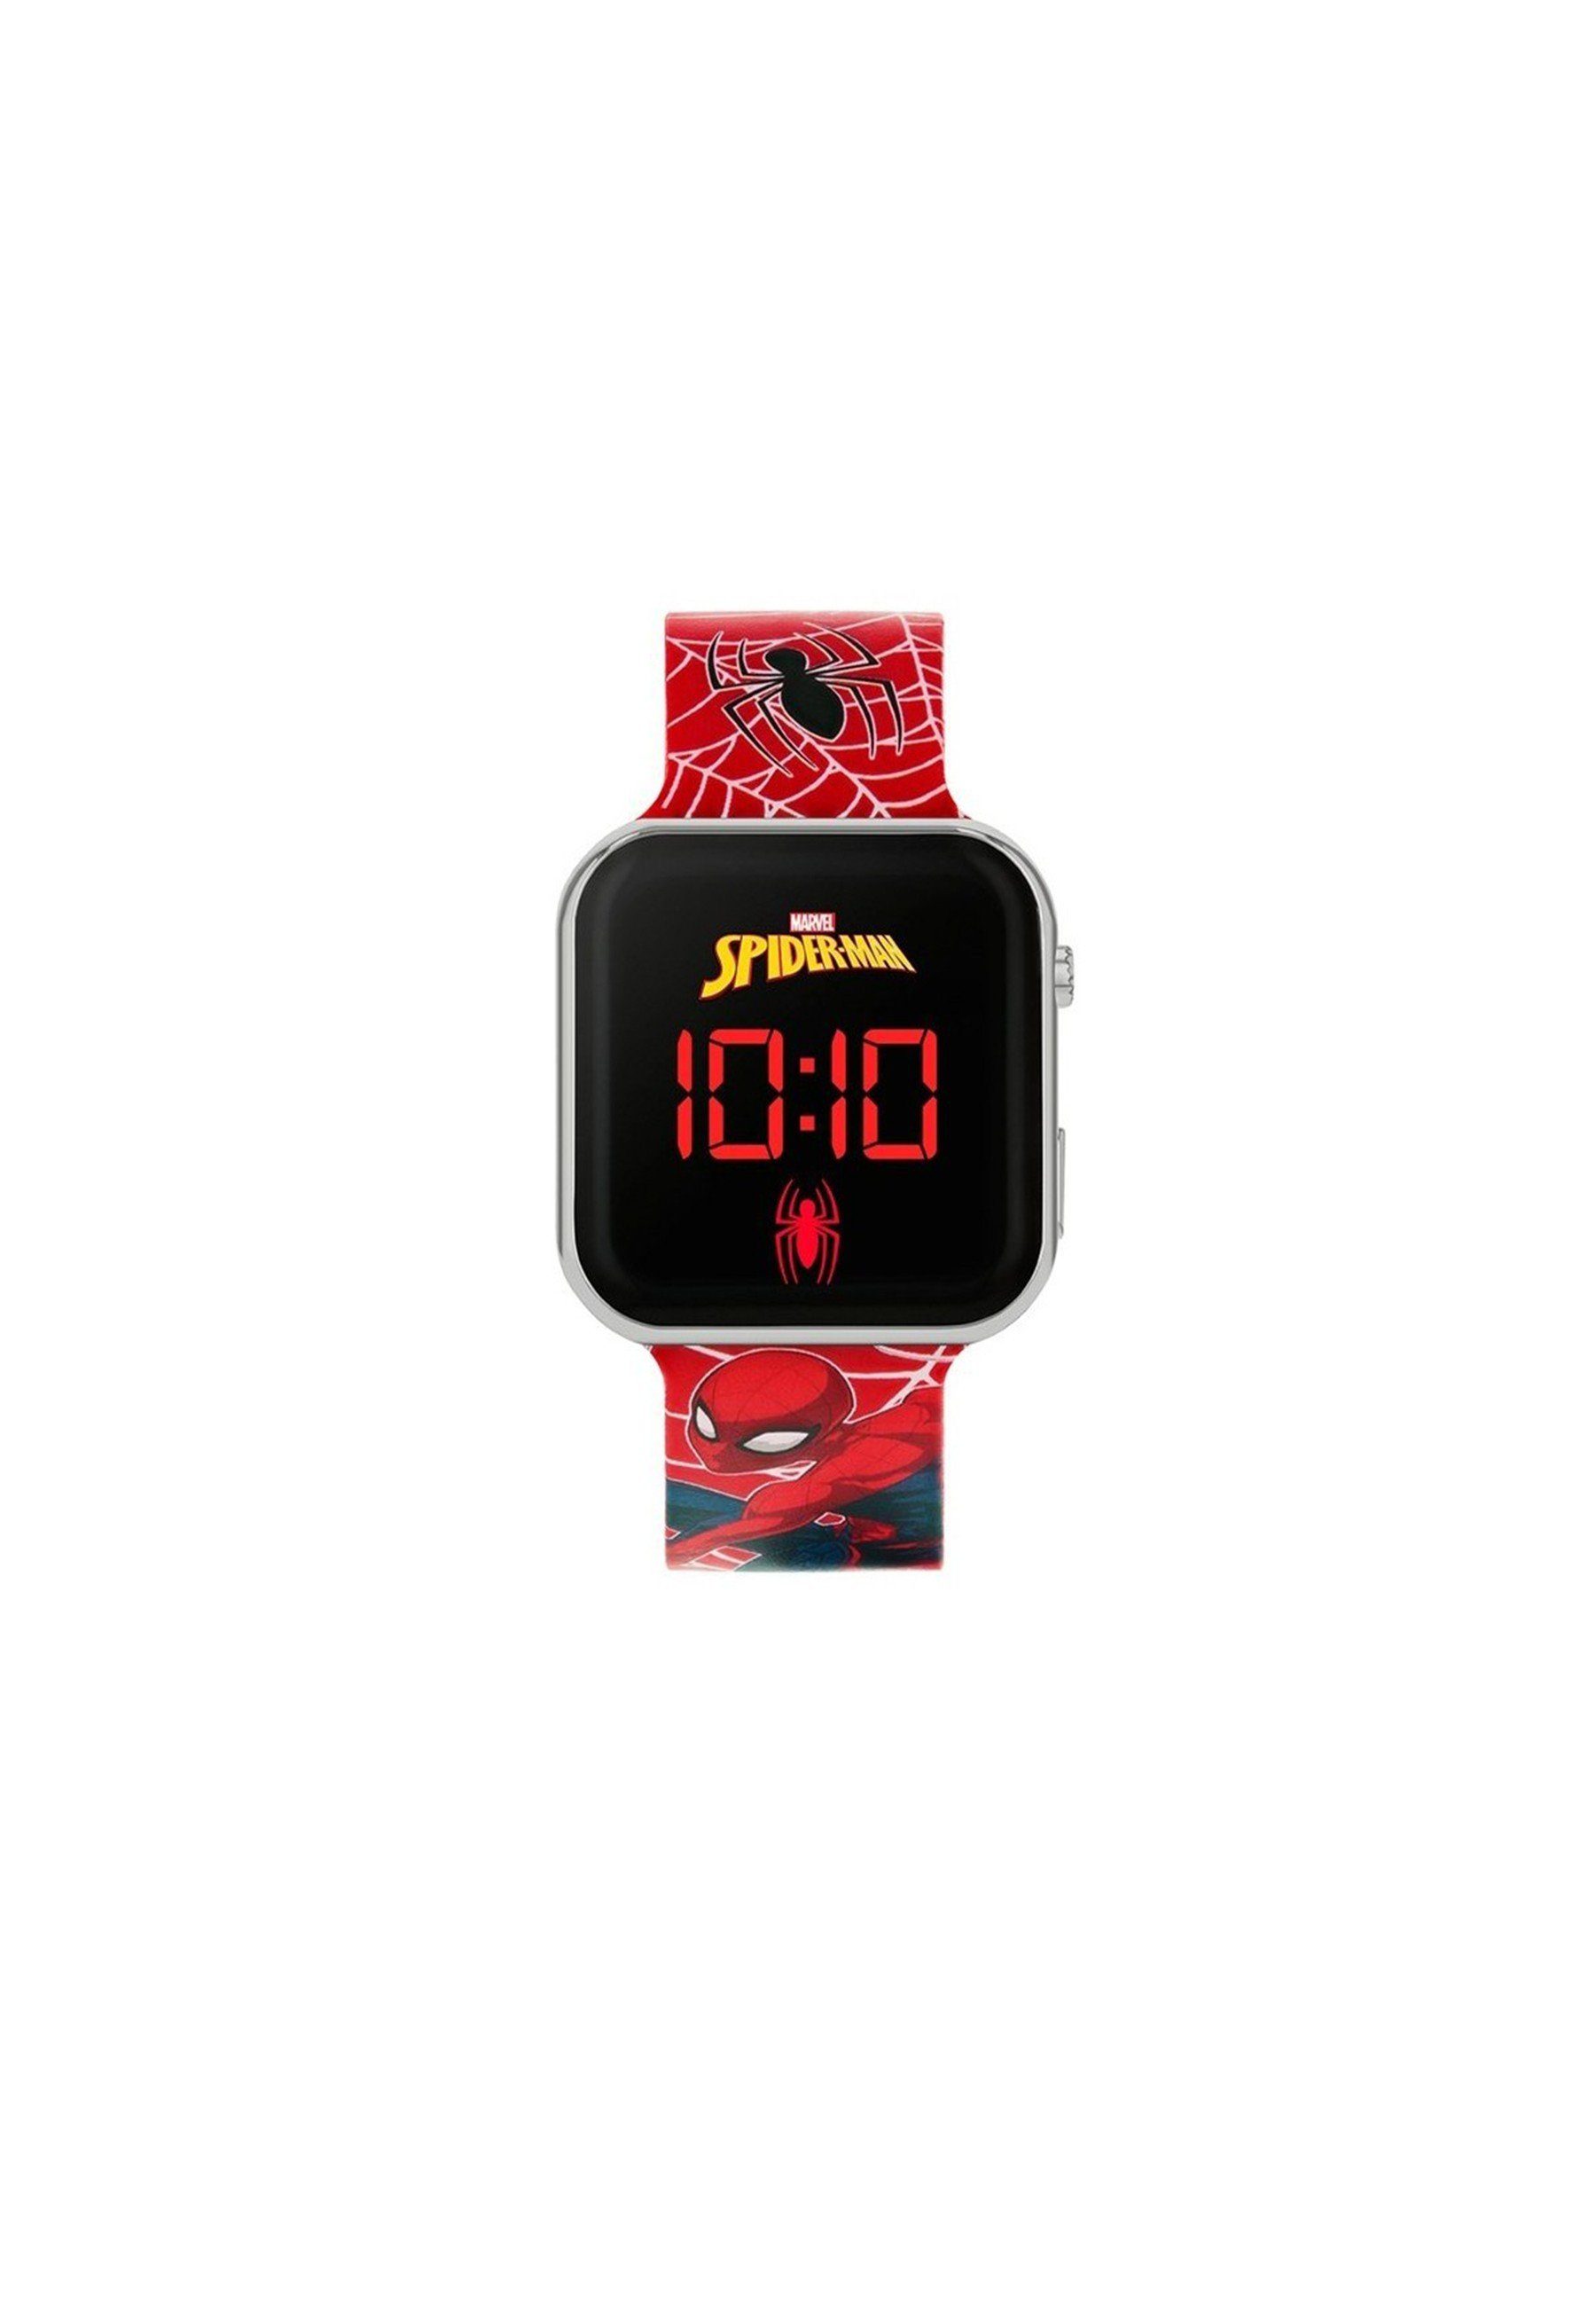 DISNEY Jewelry Digitaluhr Disney Spiderman LED Watch, (inkl. Schmuckbox)